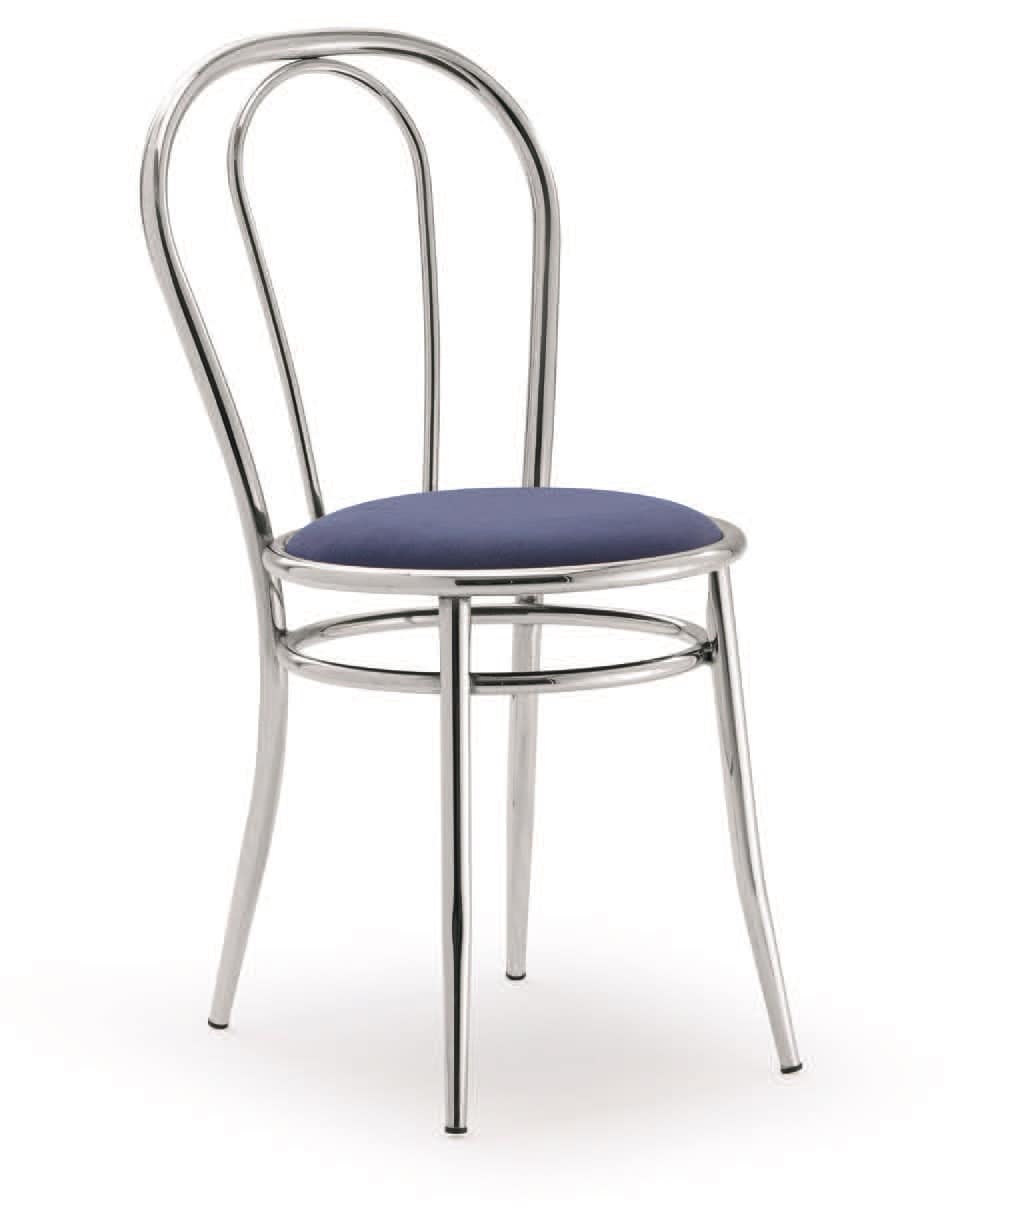 SE 025, Basic metal chair, upholstered seat, for bar snacks